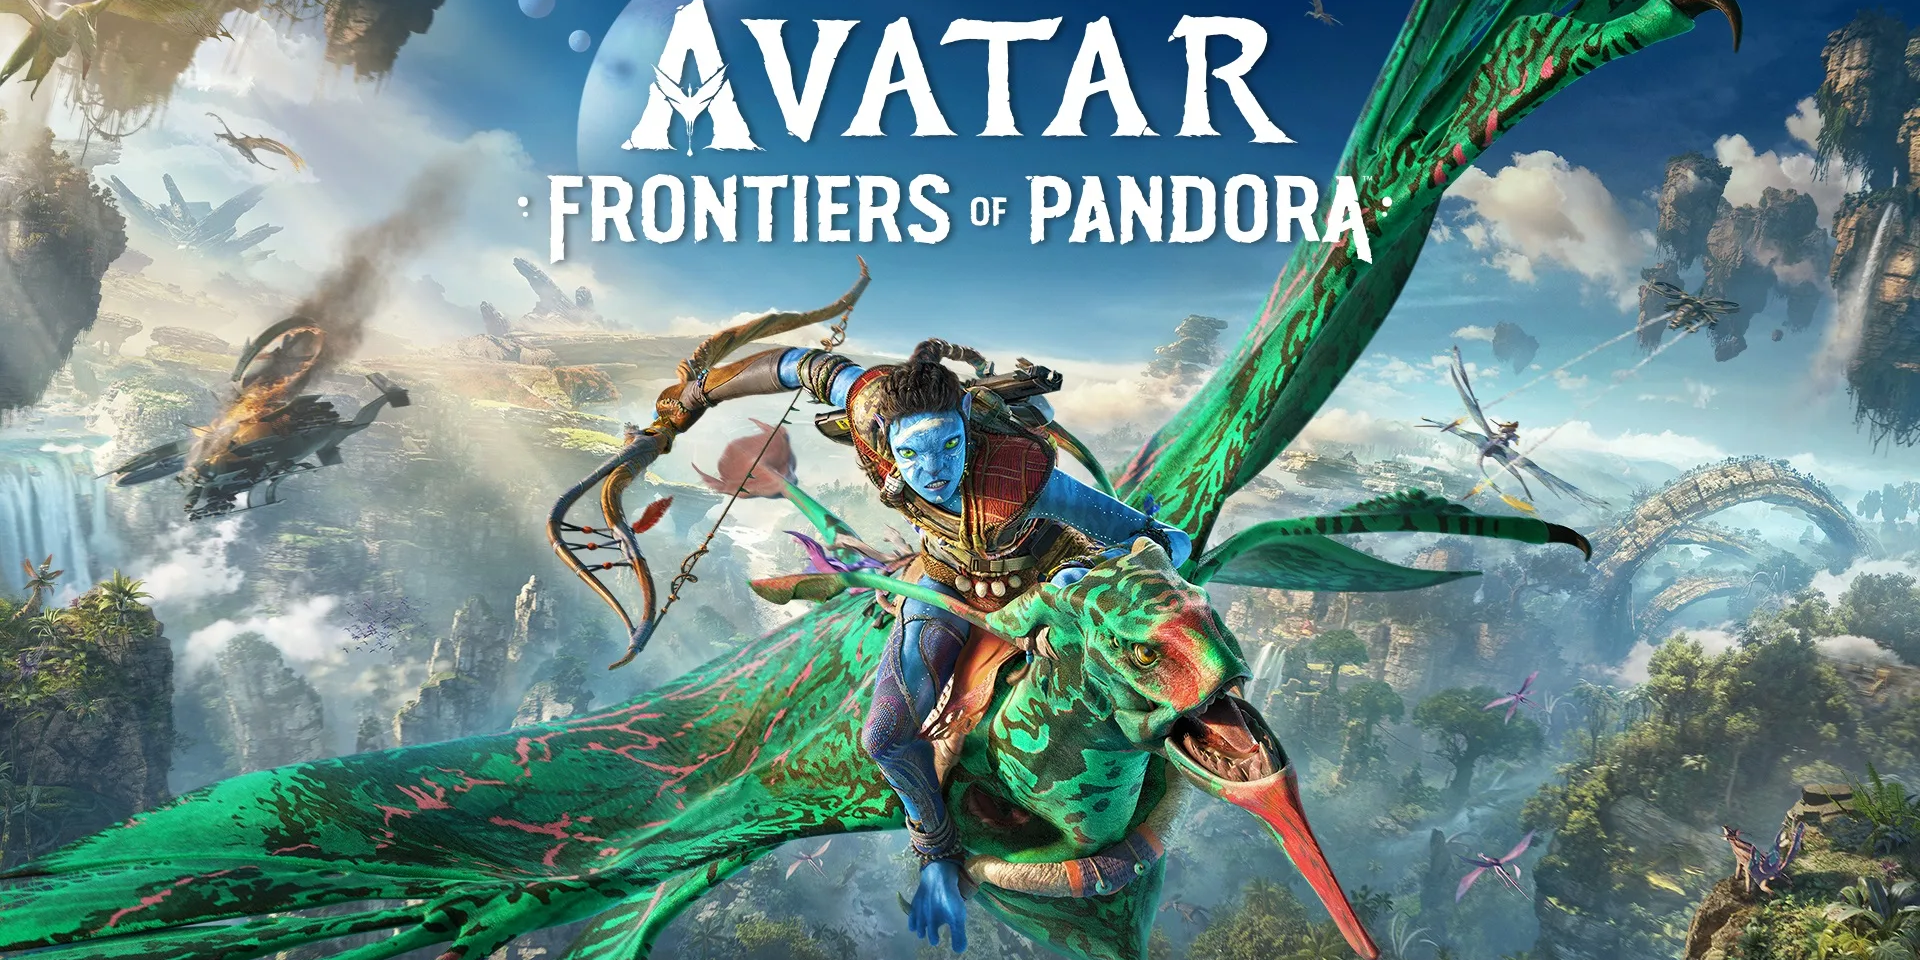 Avatar Frontiers of Pandora Na'vi Warrior Ikran Mountain Banshee Cropped